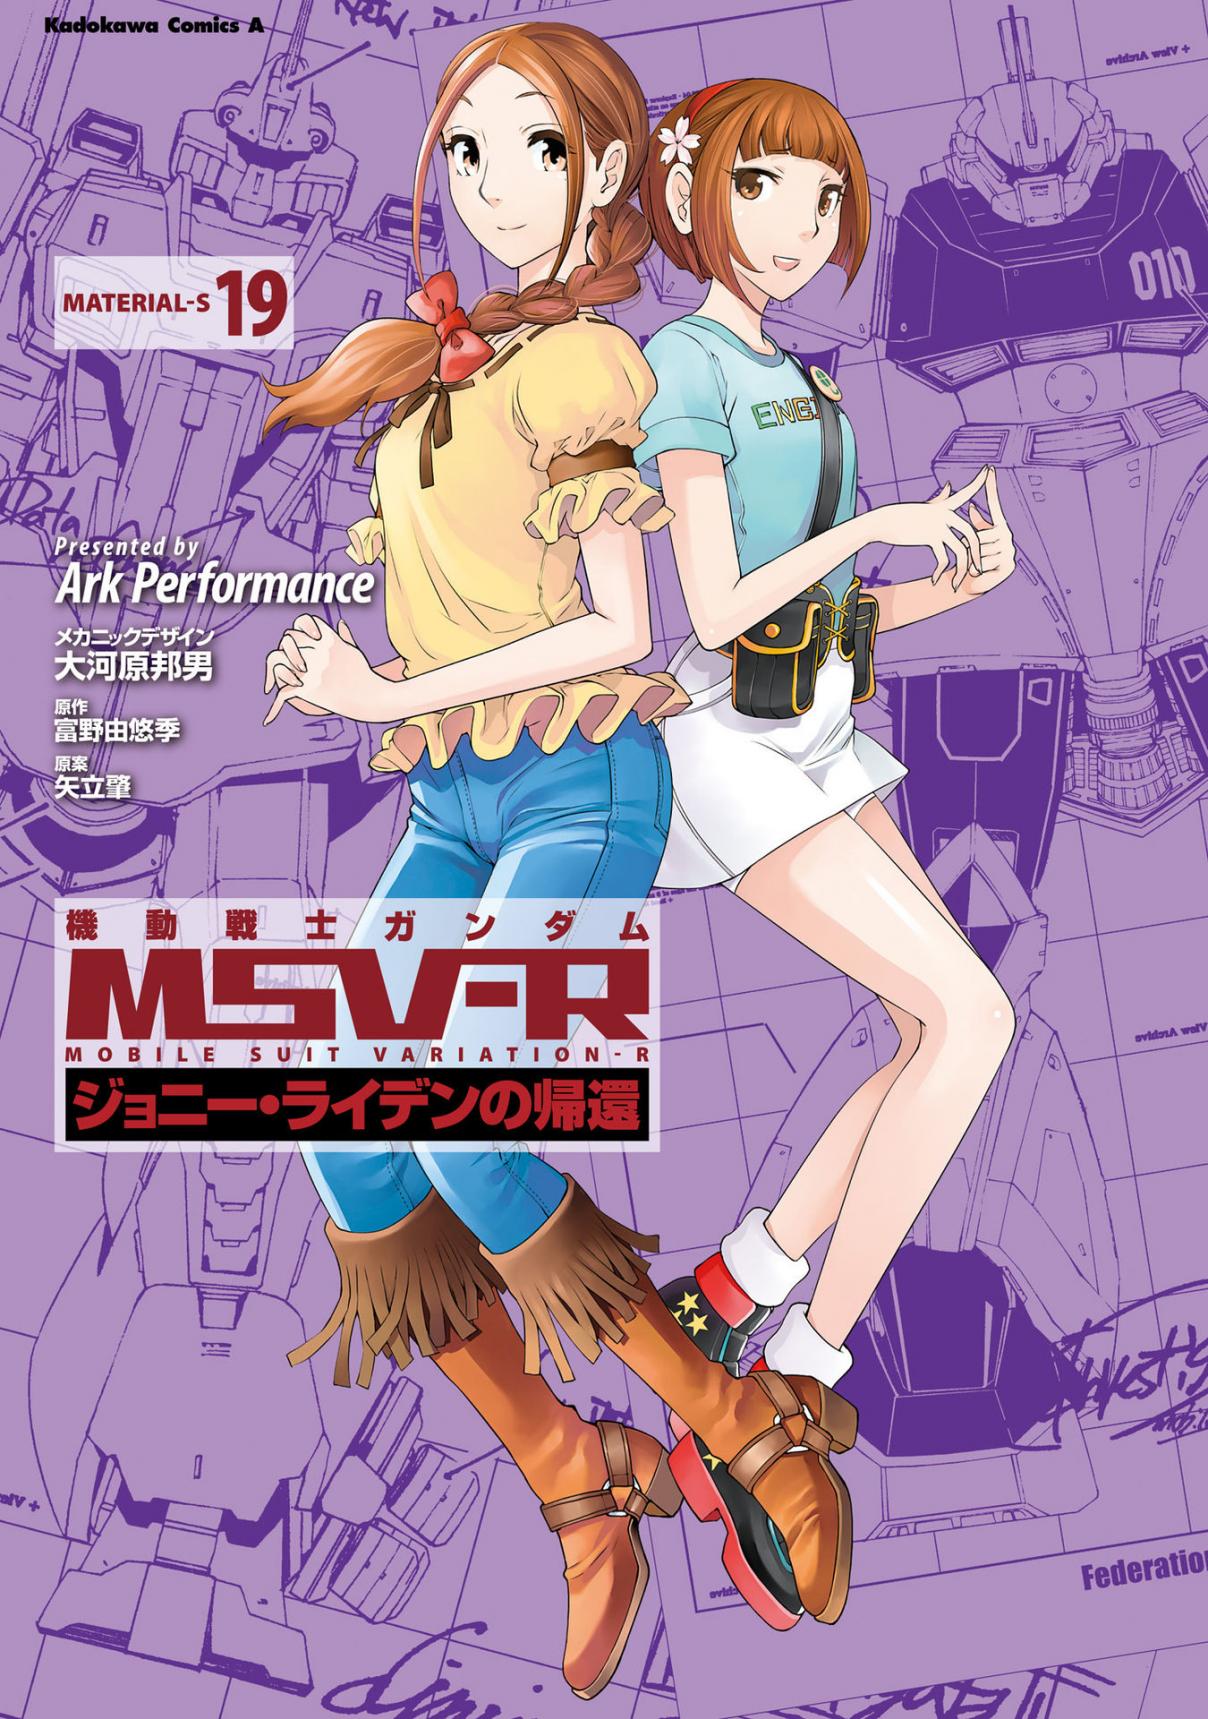 Mobile Suit Gundam MSV-R - Return of Johnny Ridden 96